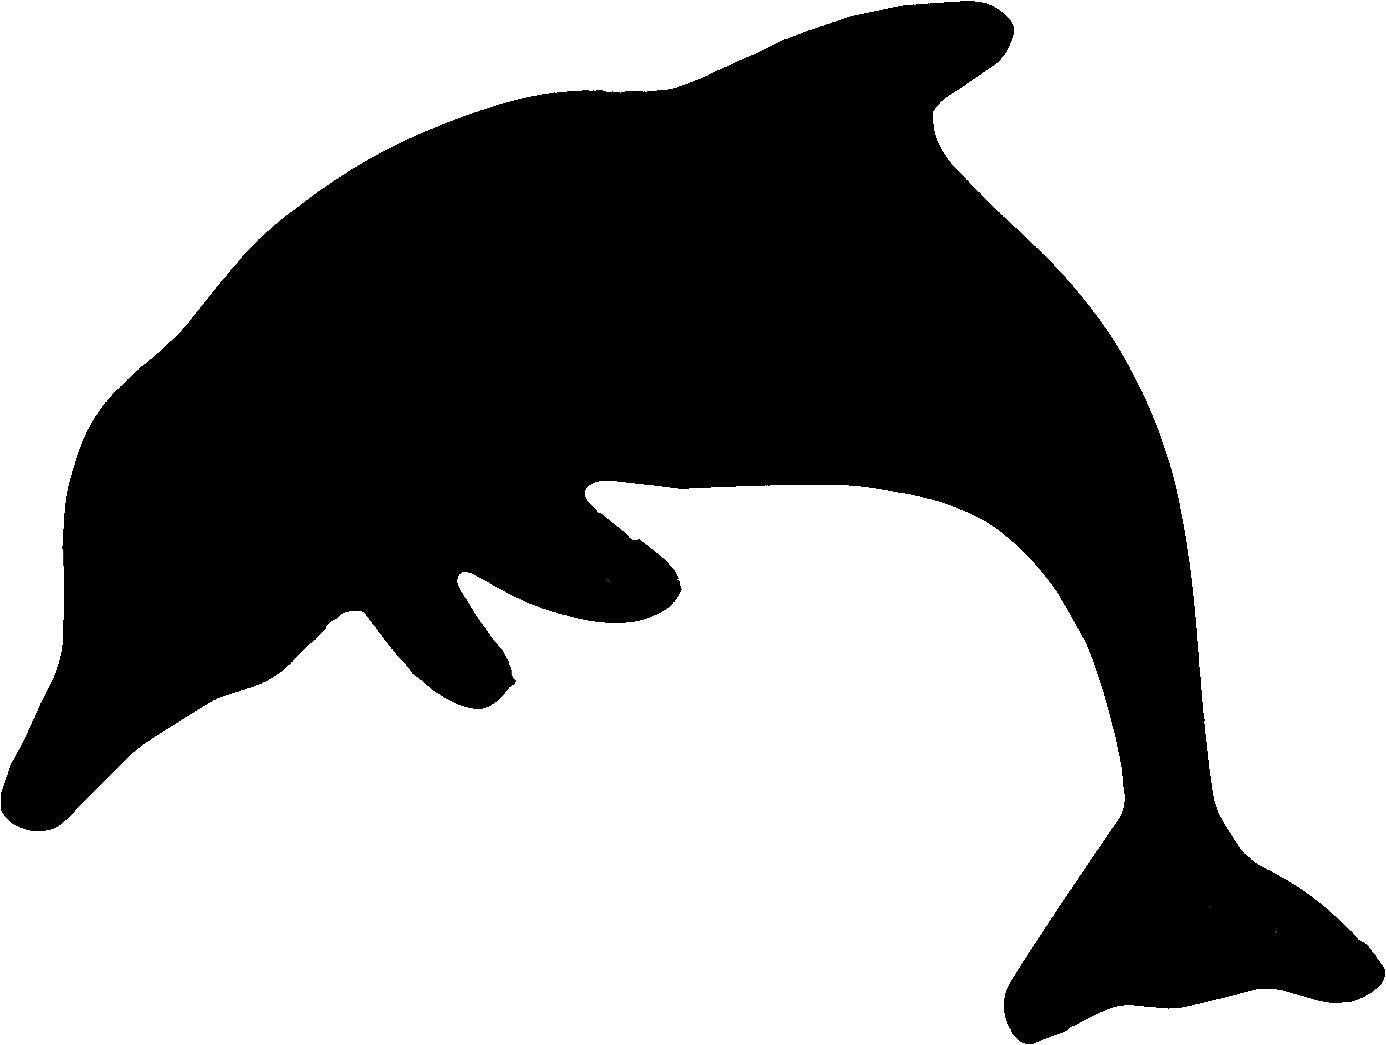 Dolphin silhouette clipart ki - Silhouette Clip Art